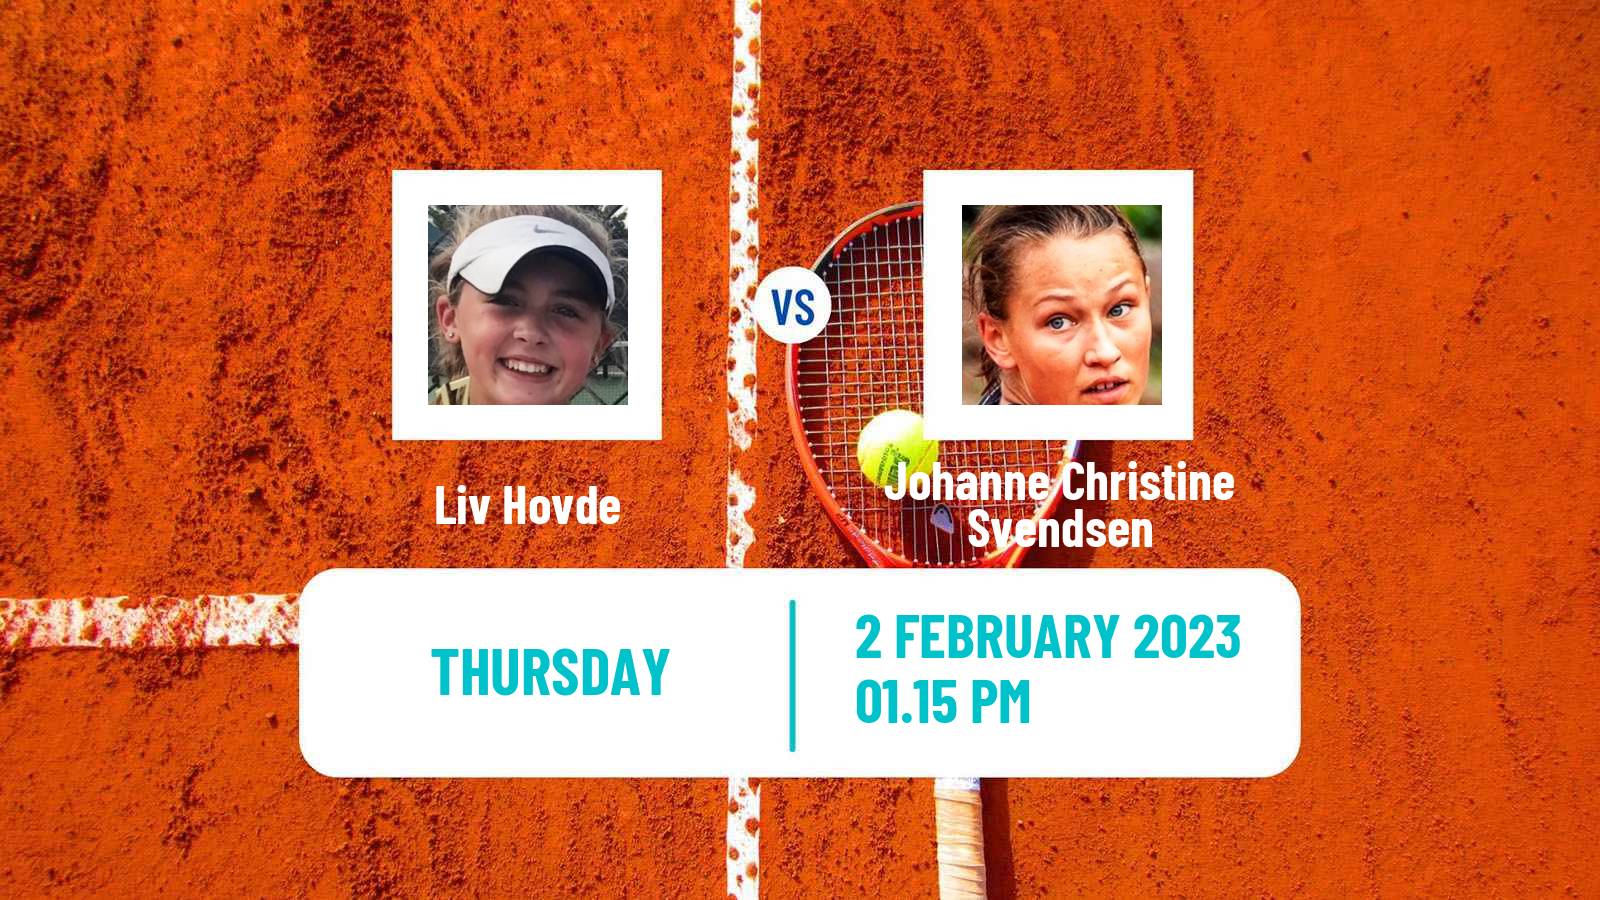 Tennis ITF Tournaments Liv Hovde - Johanne Christine Svendsen